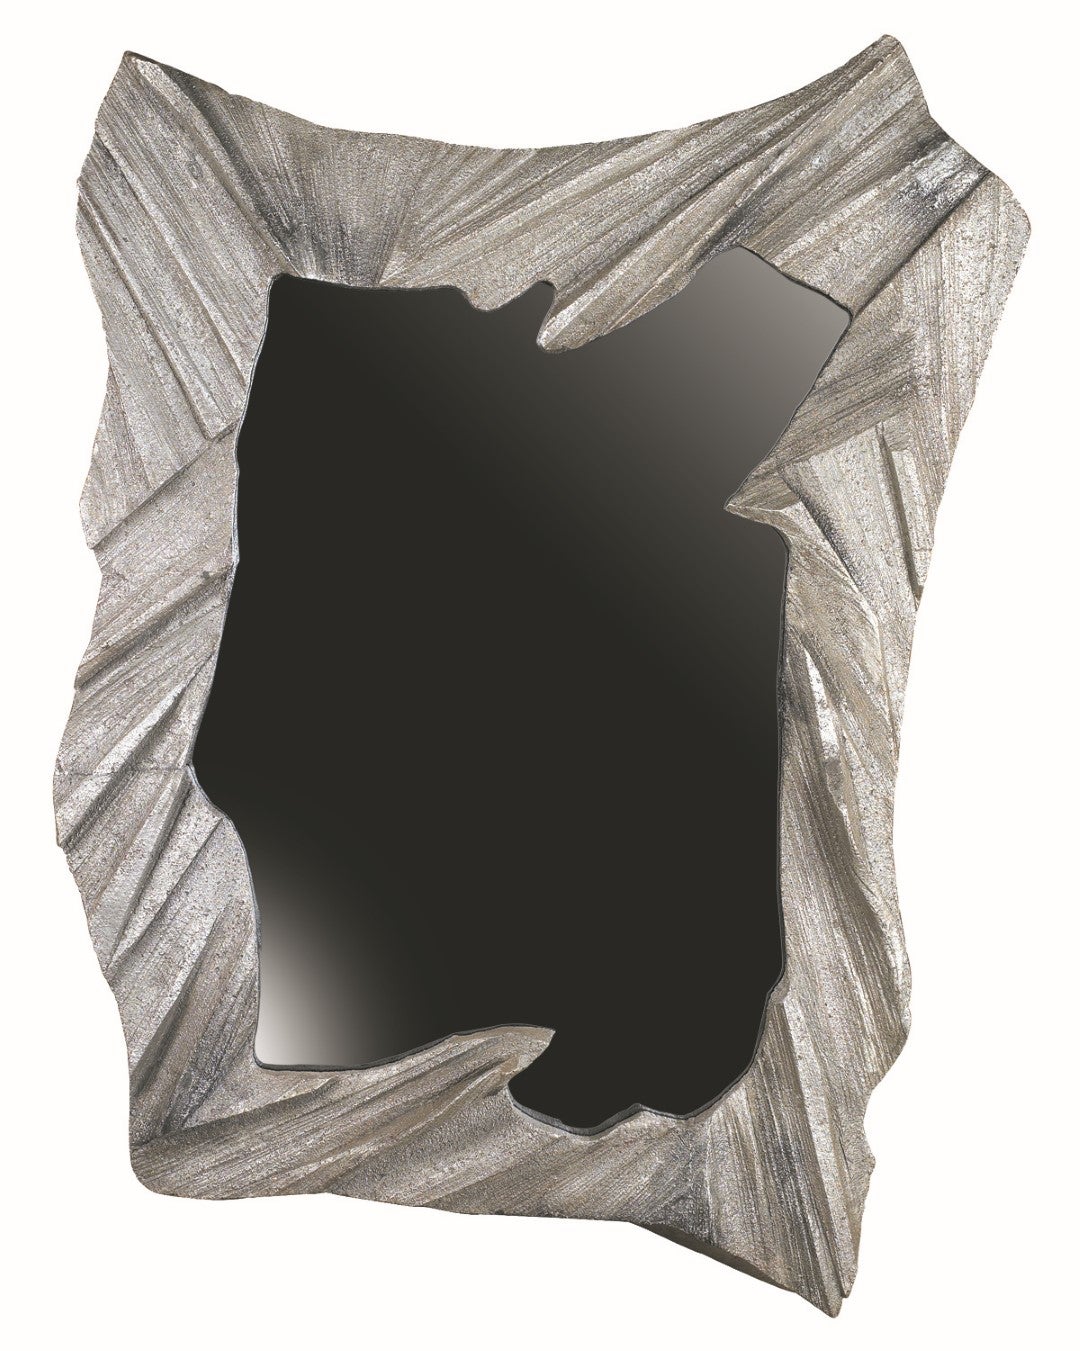 Handgeformter:: gegossener Aluminiumspiegel - Mannara Mirror